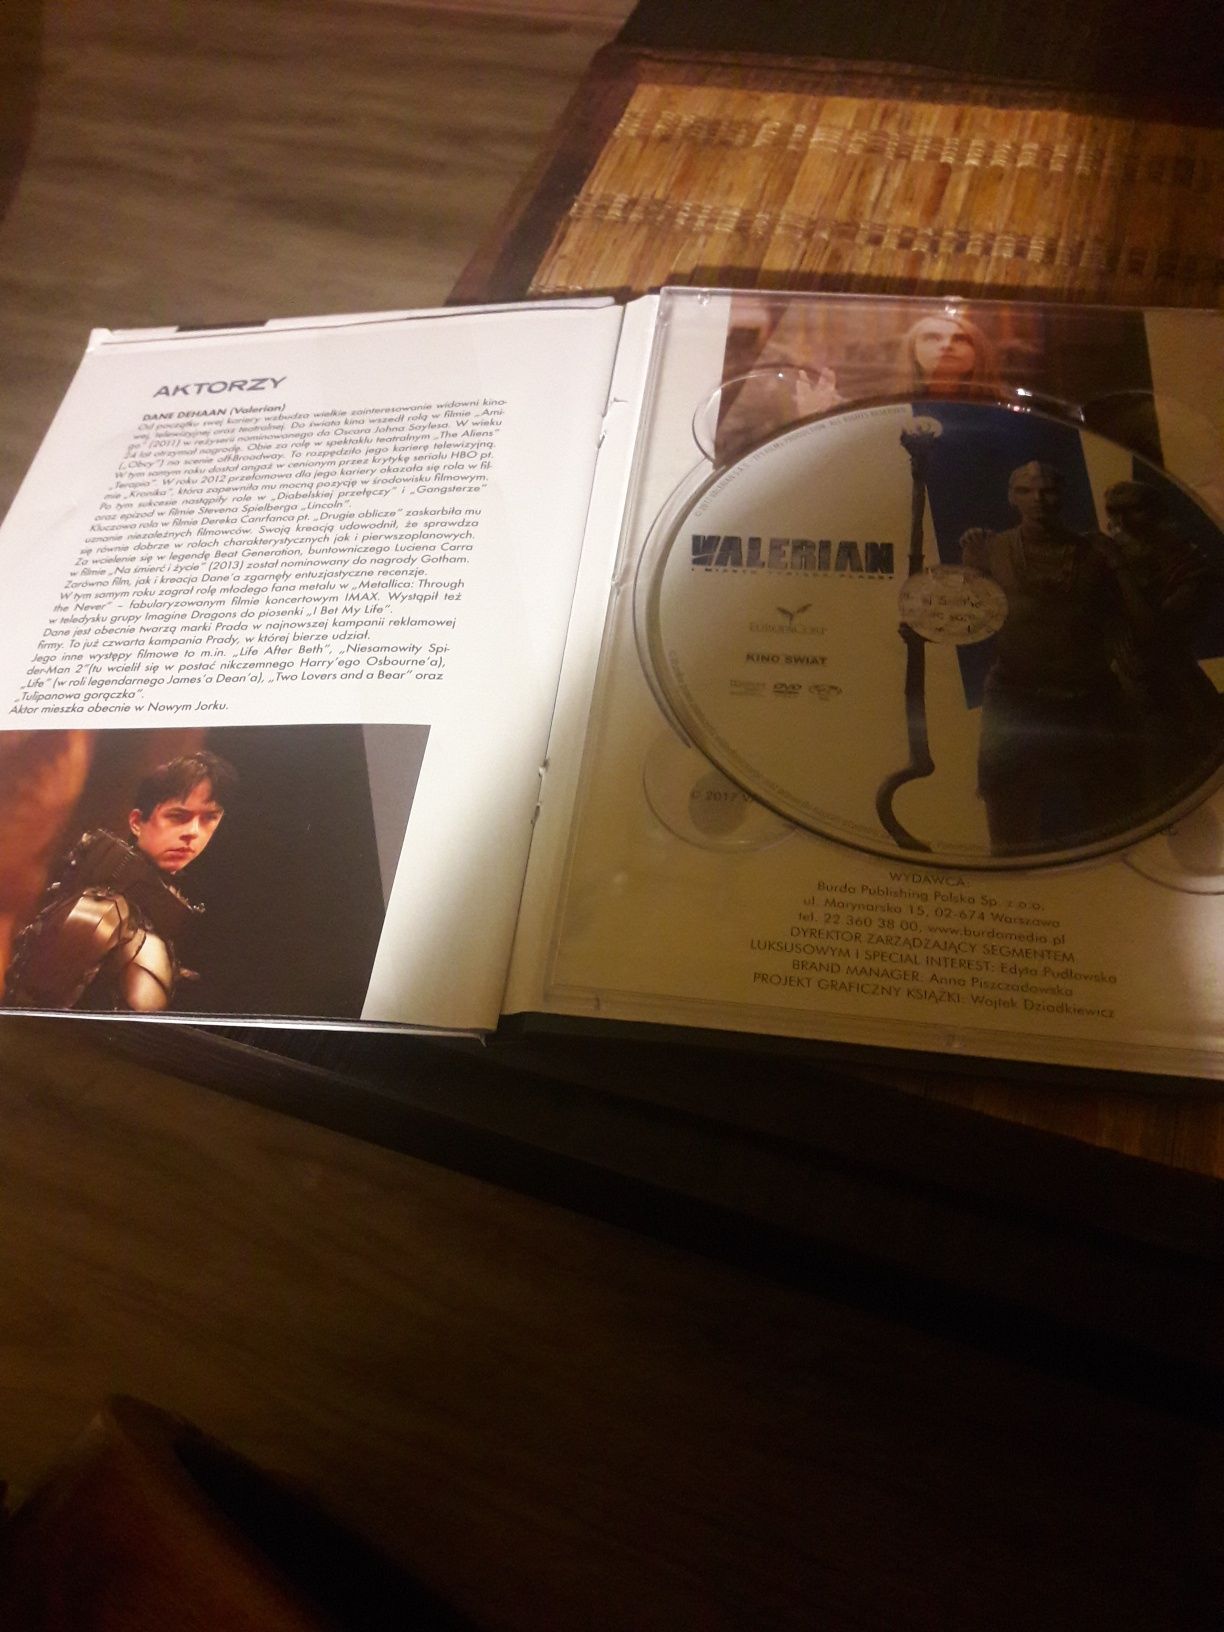 Film DVD Valerian